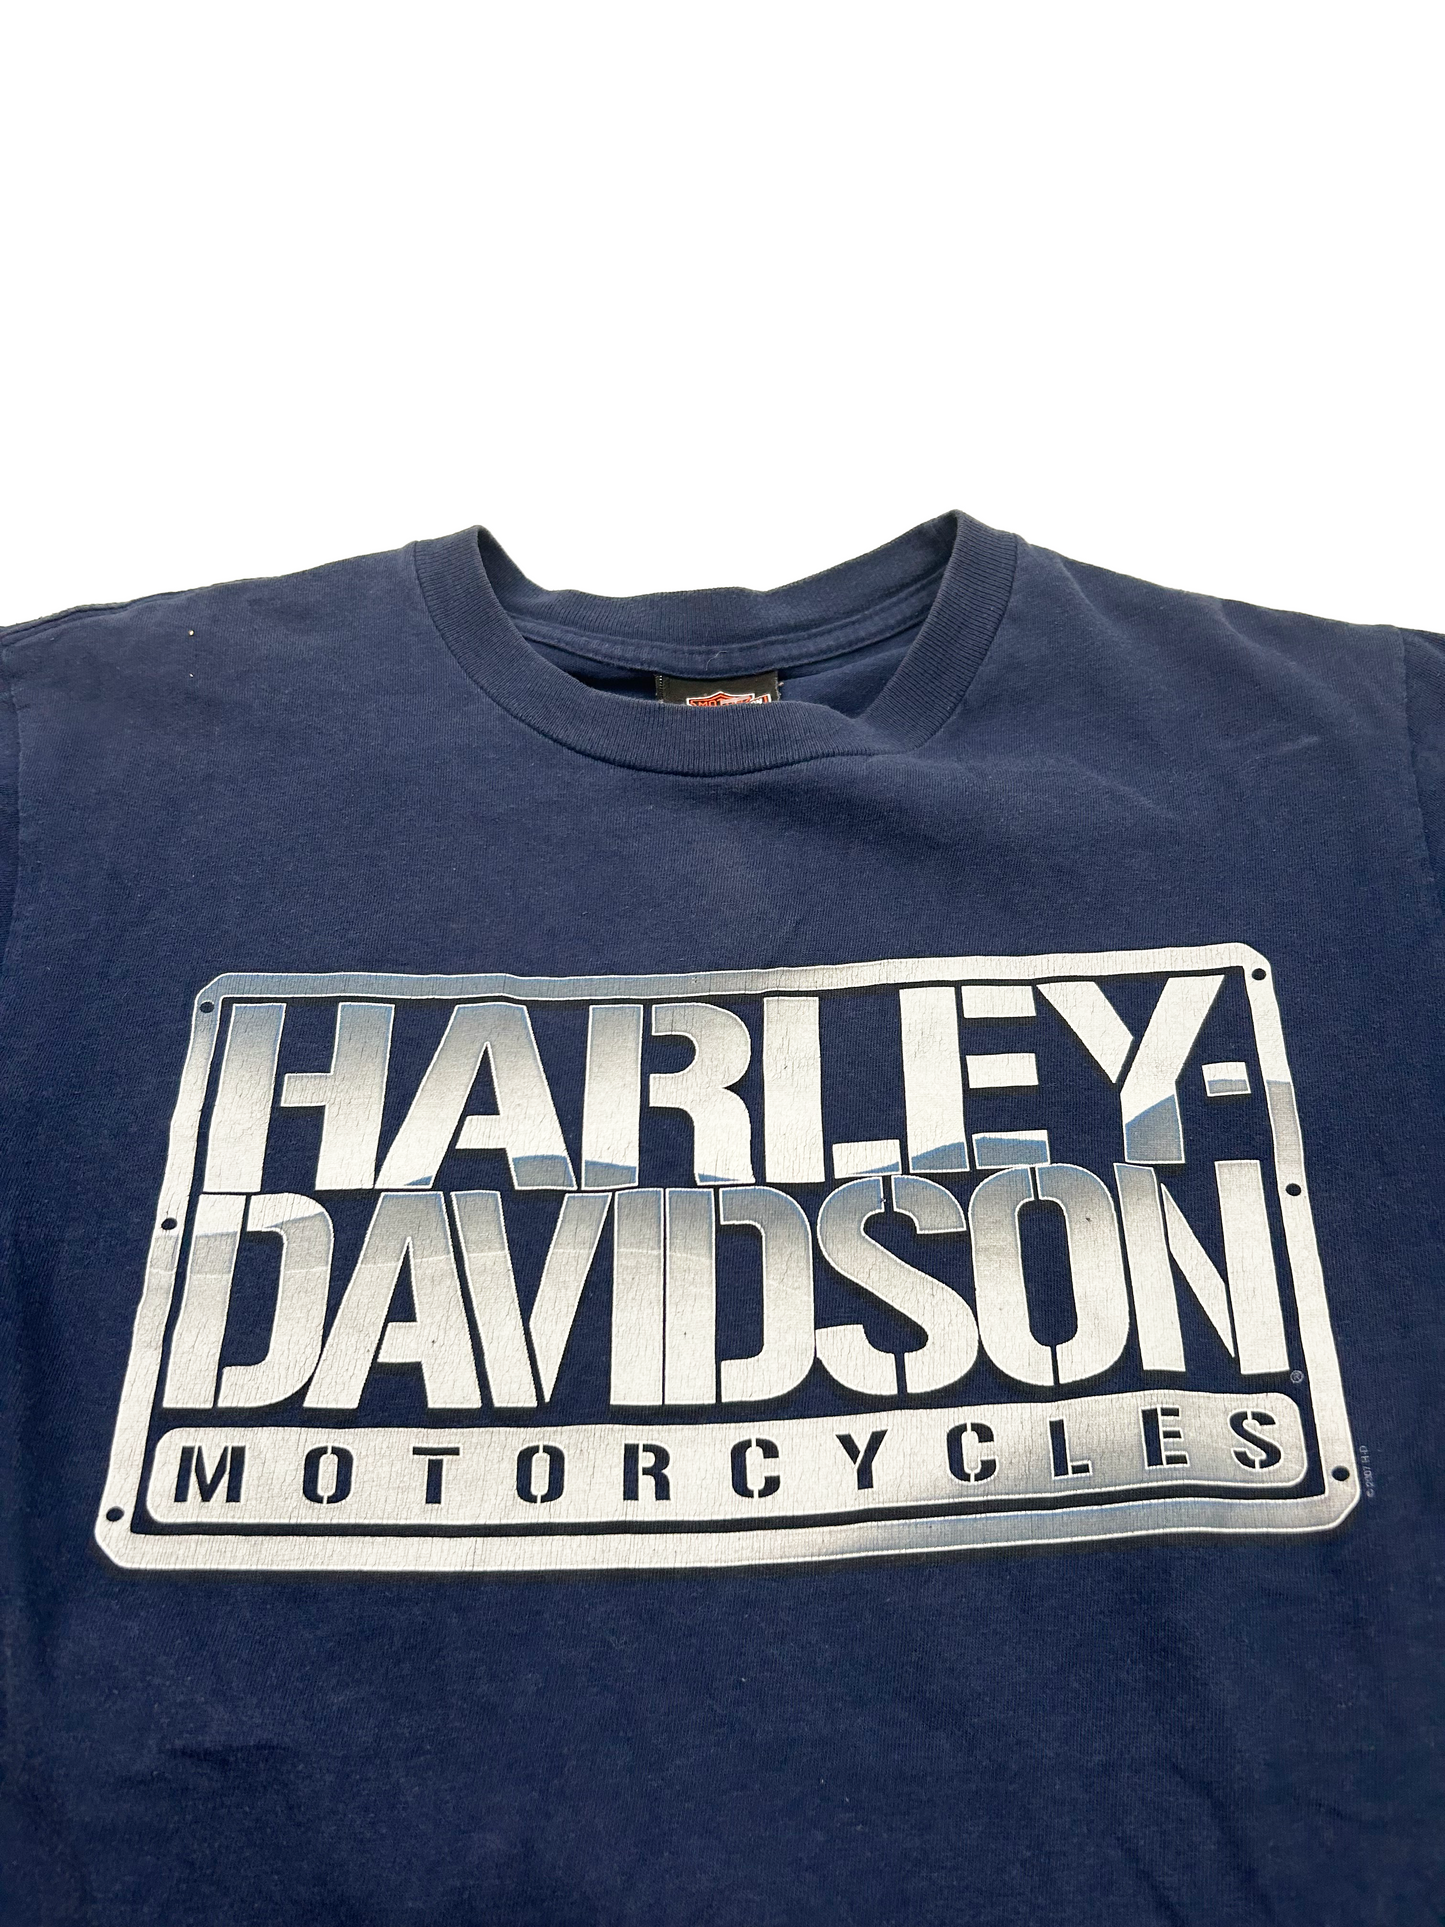 Harley-Davidson Motorcycles Blue T-Shirt